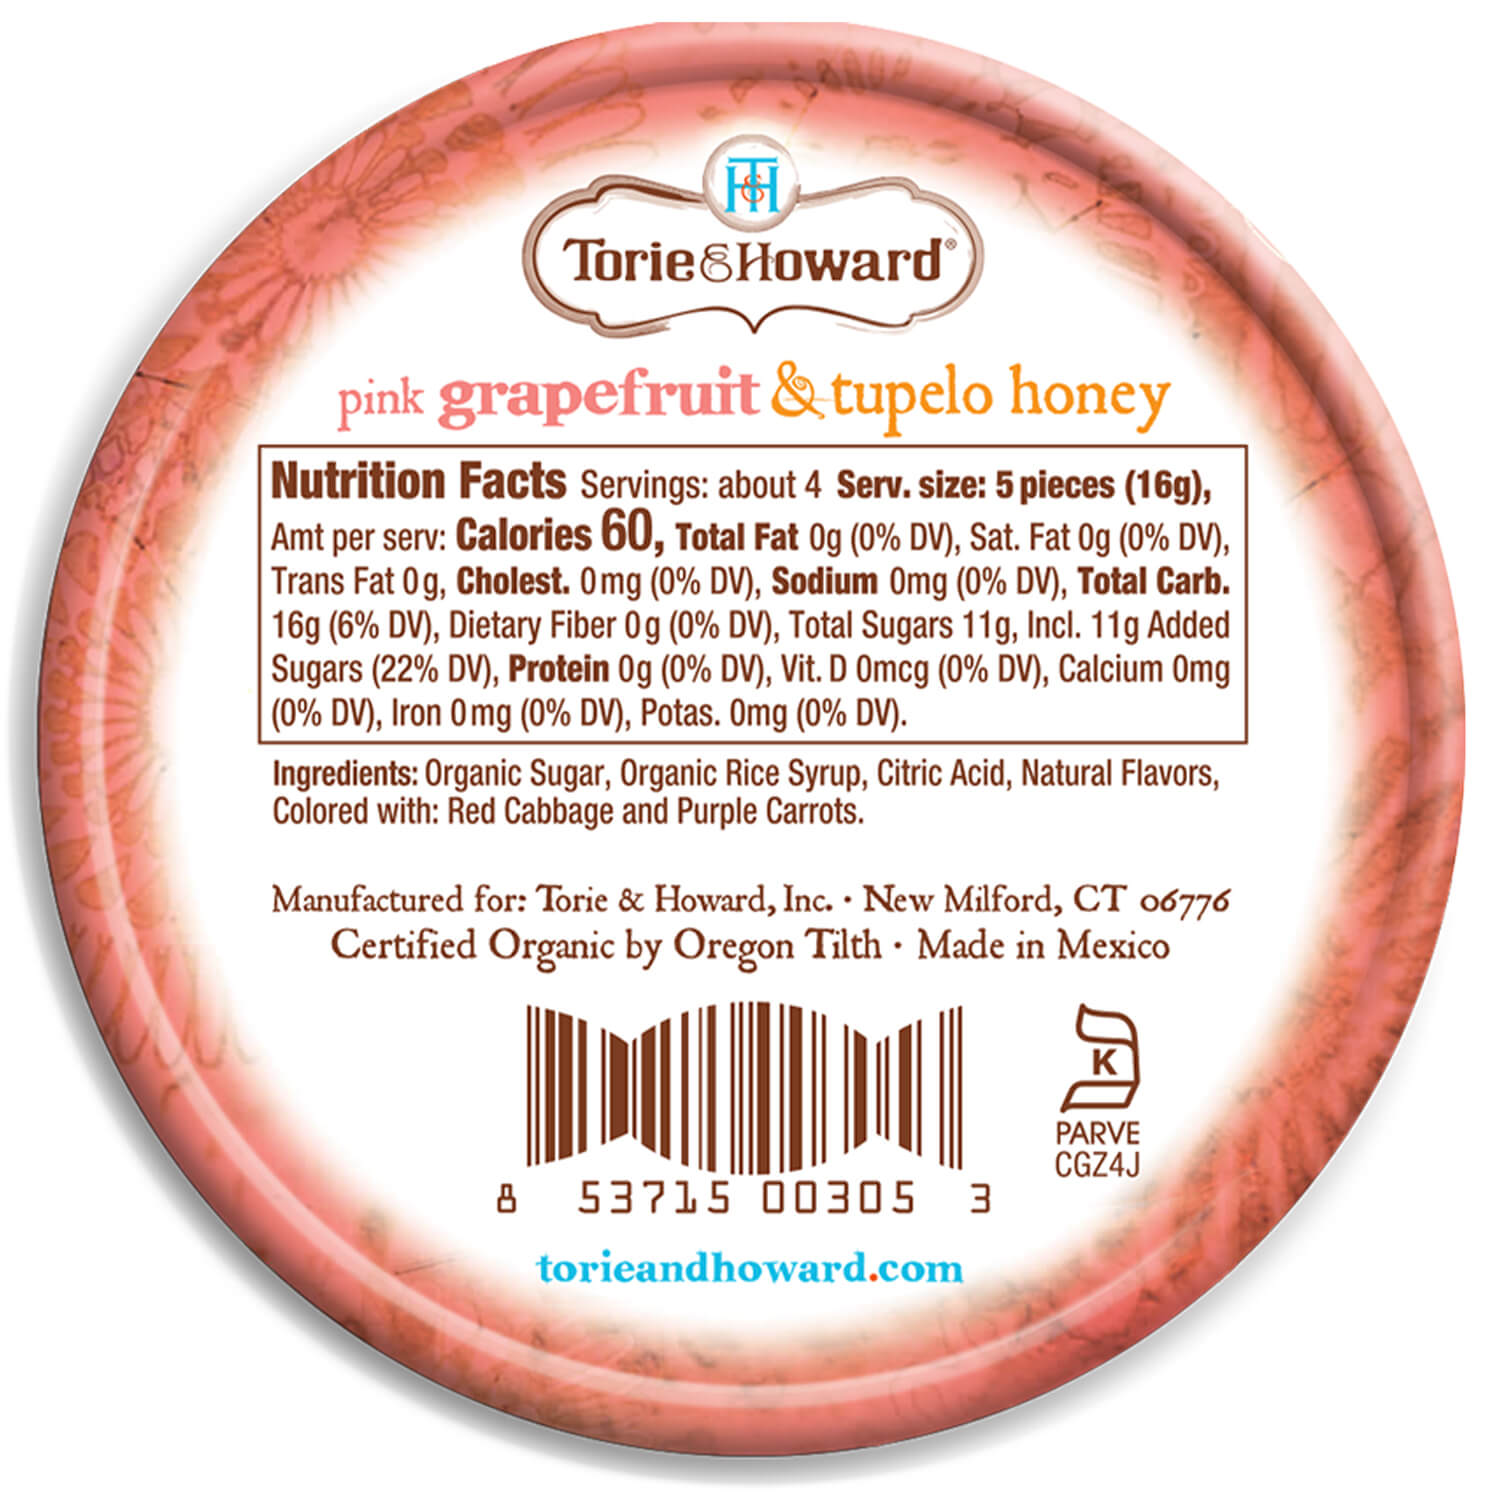 Torie & Howard Grapefruit and Tupelo Honey Organic Hard Candy 2oz Tins (8ct Box)